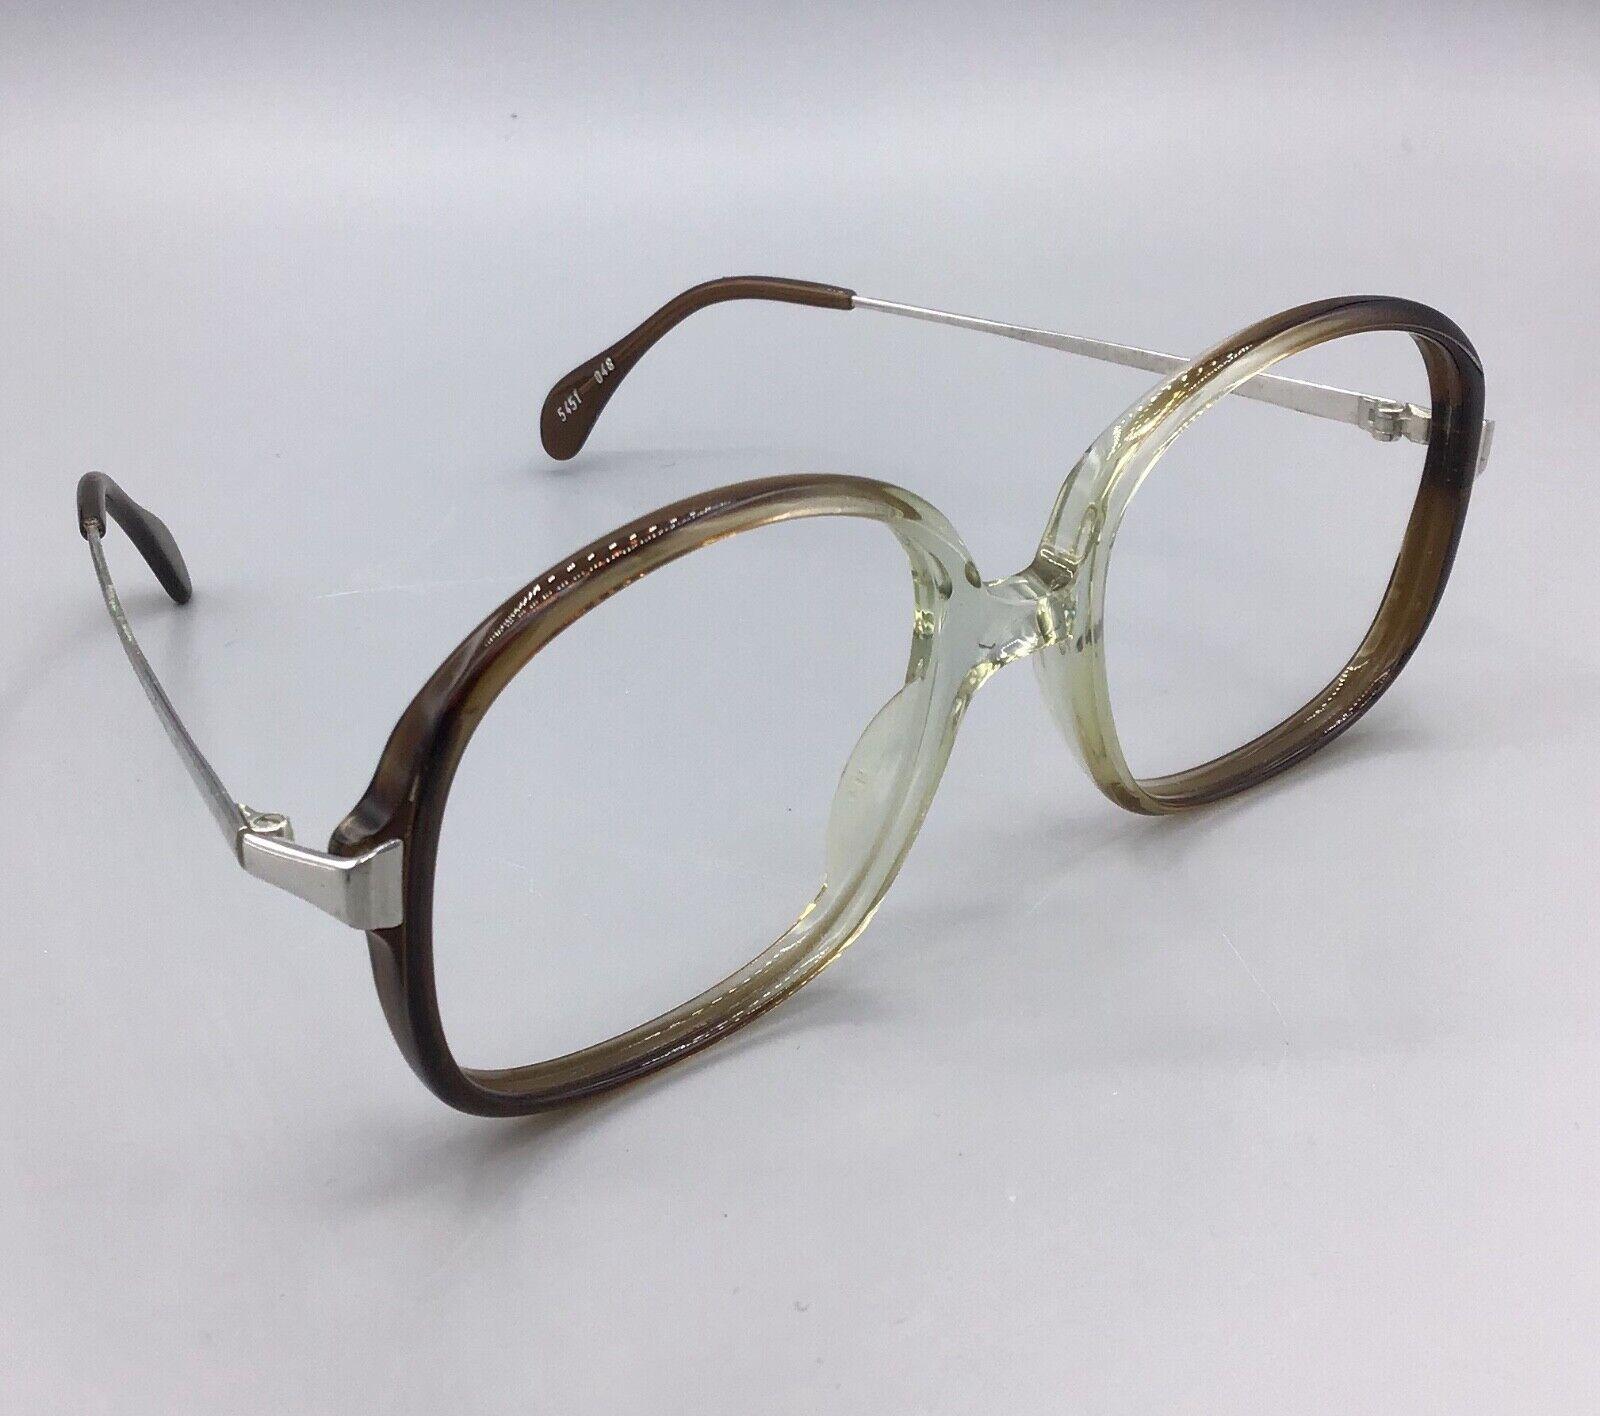 Metzler occhiale vintage Eyewear frame brillen lunettes Made in Germany 5451 048